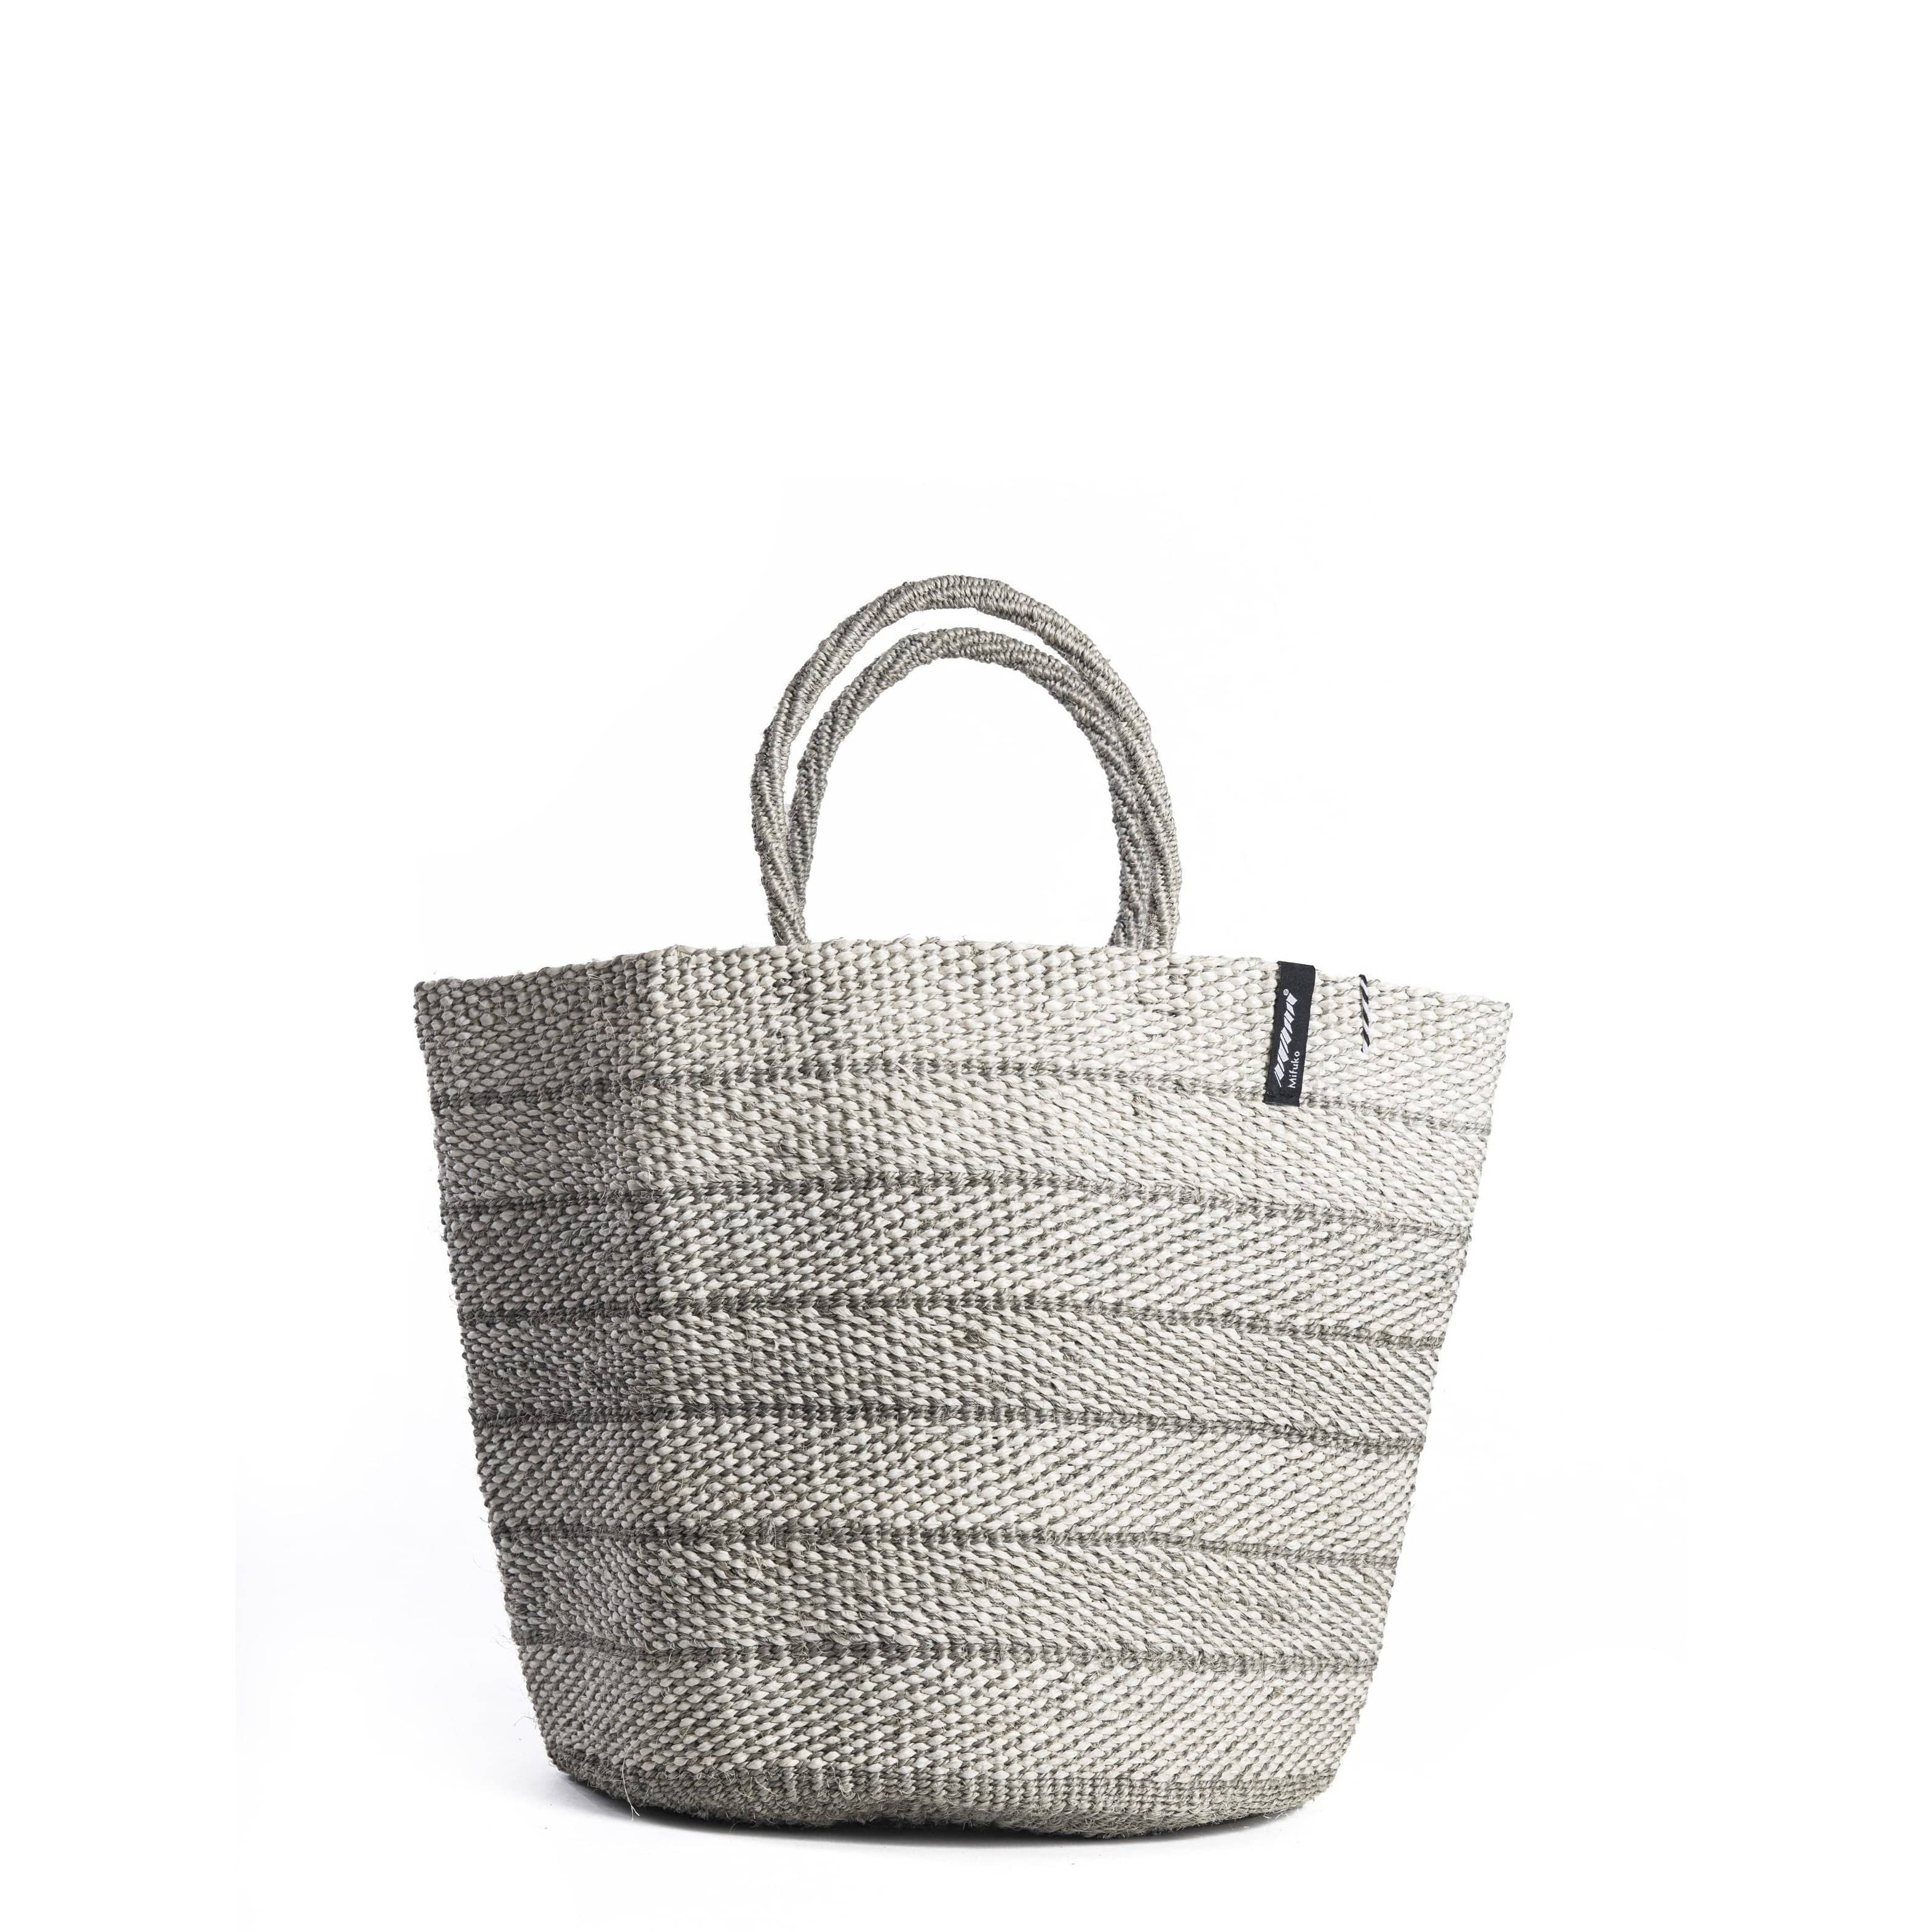 Mifuko Paper and sisal Market basket M Kiondo market basket | Grey twill weave with woven handle M